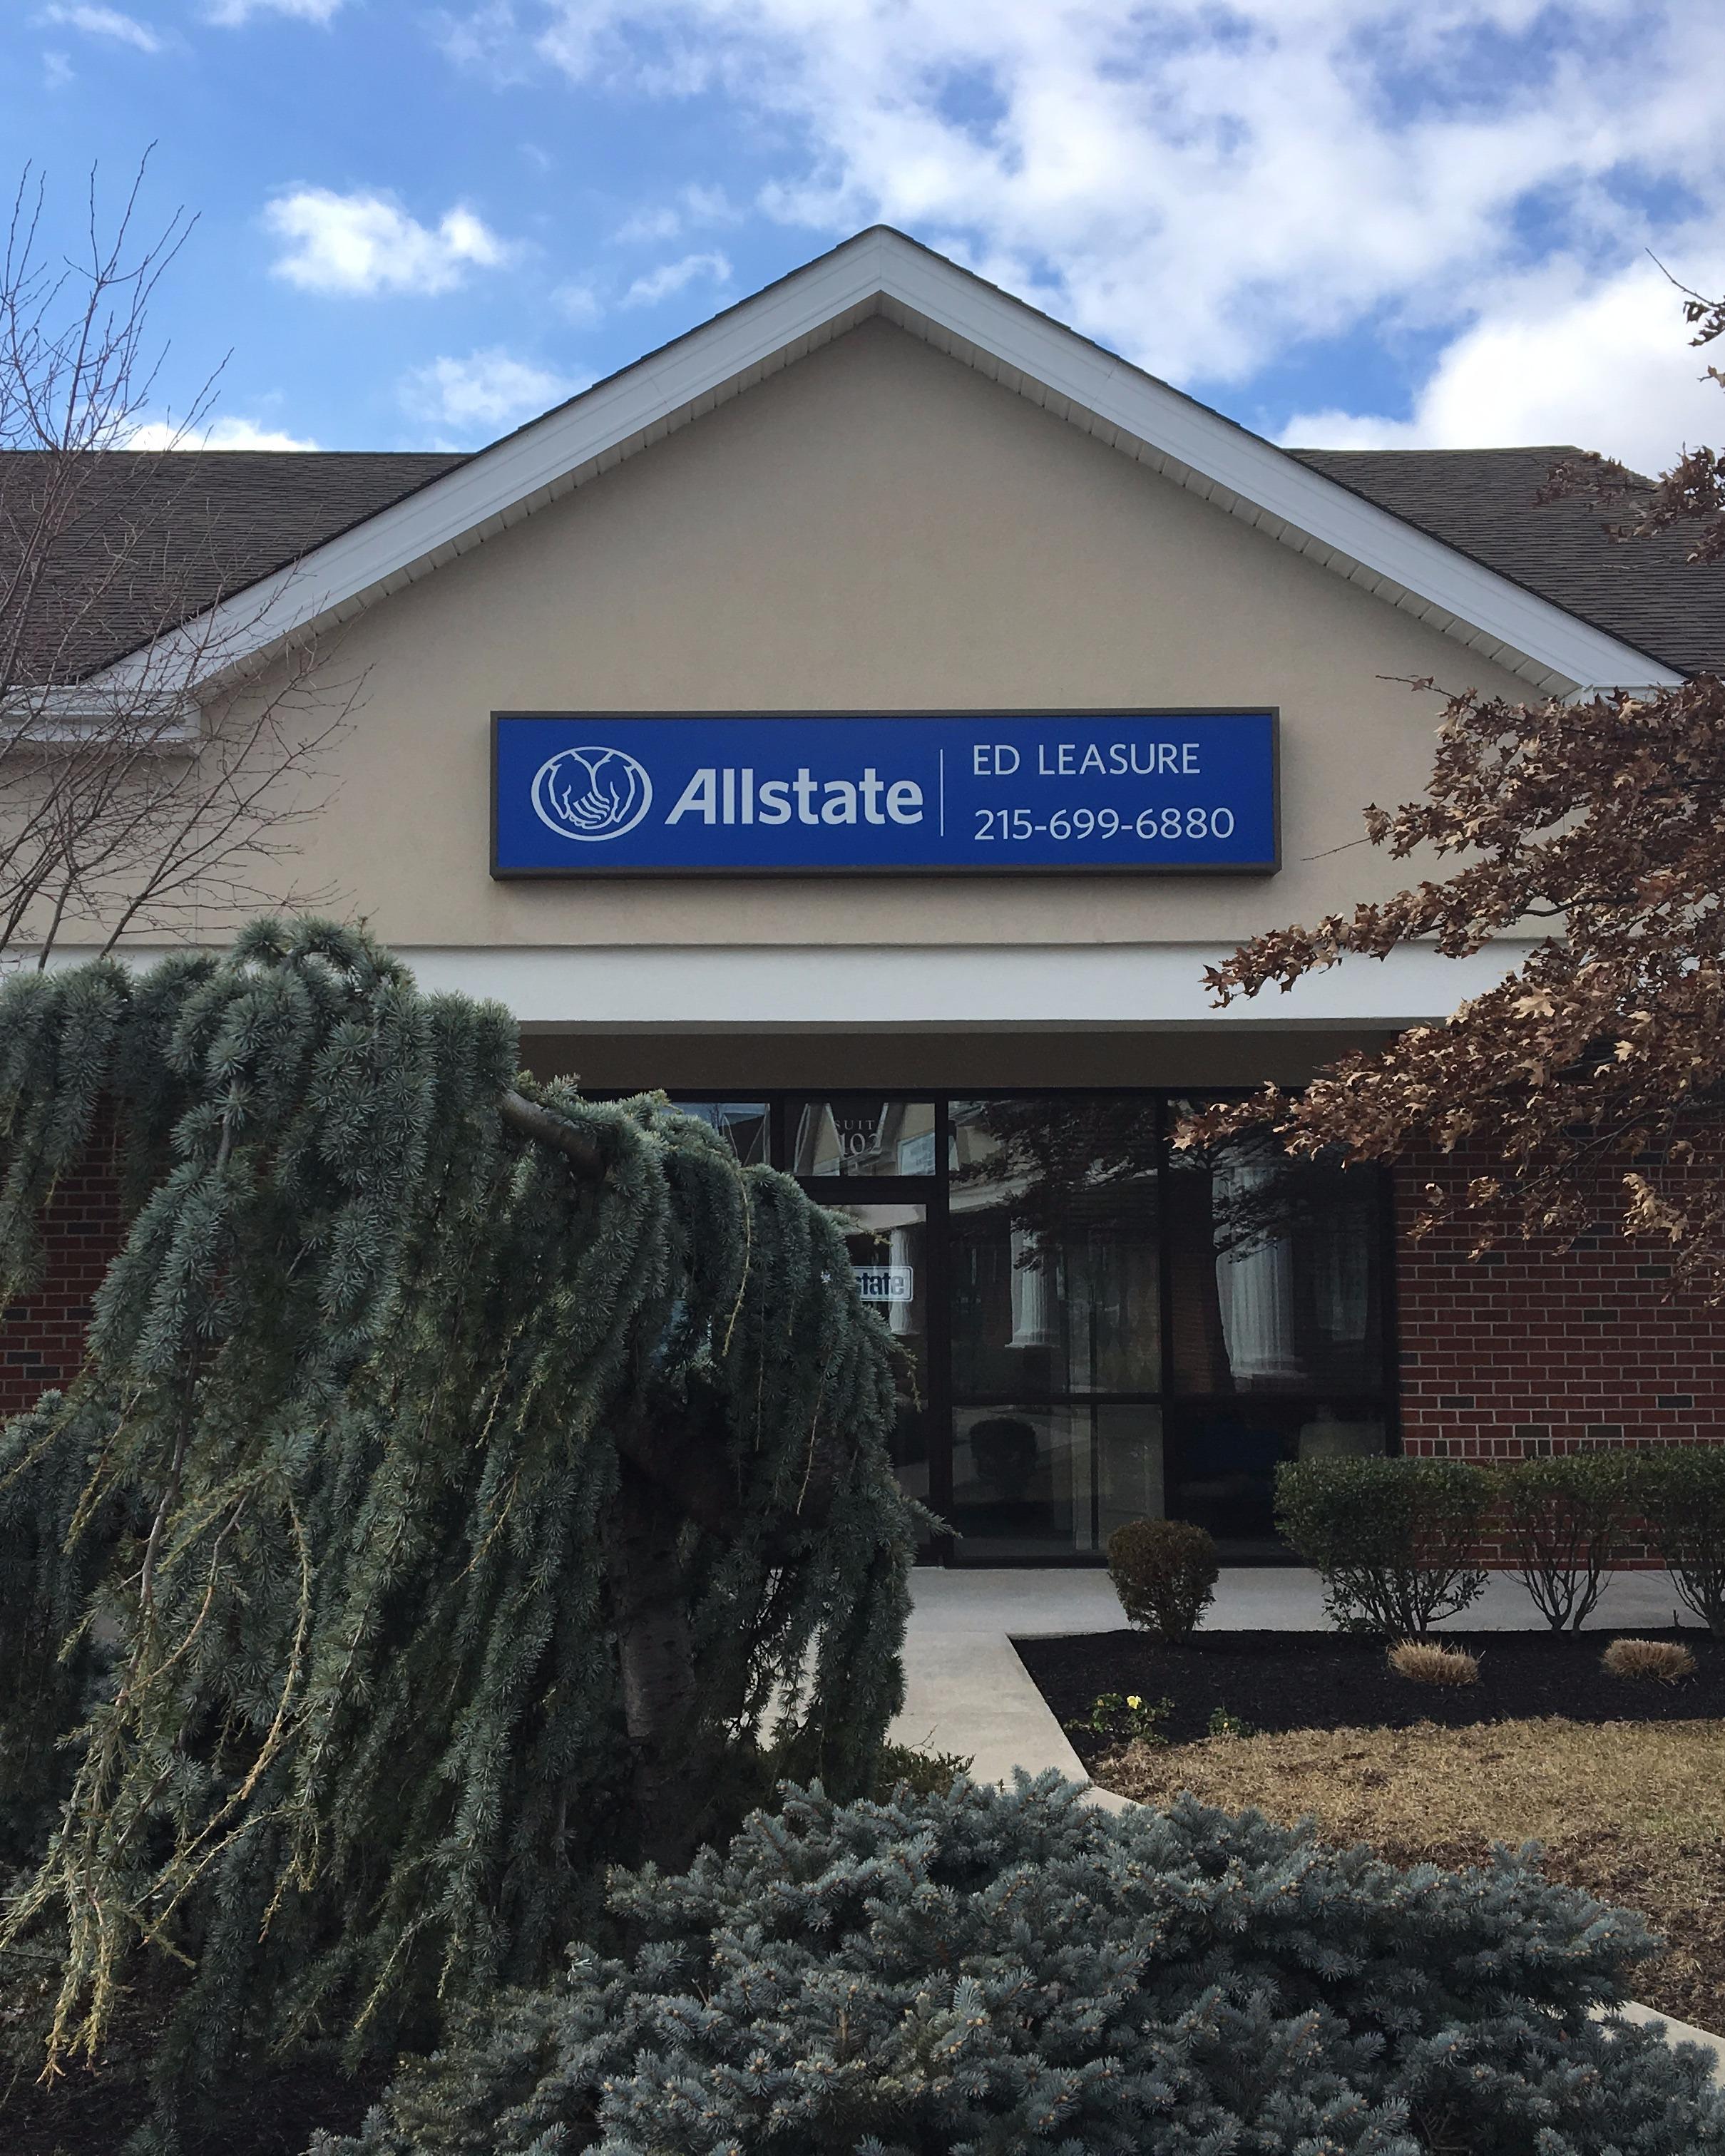 Ed Leasure: Allstate Insurance Photo